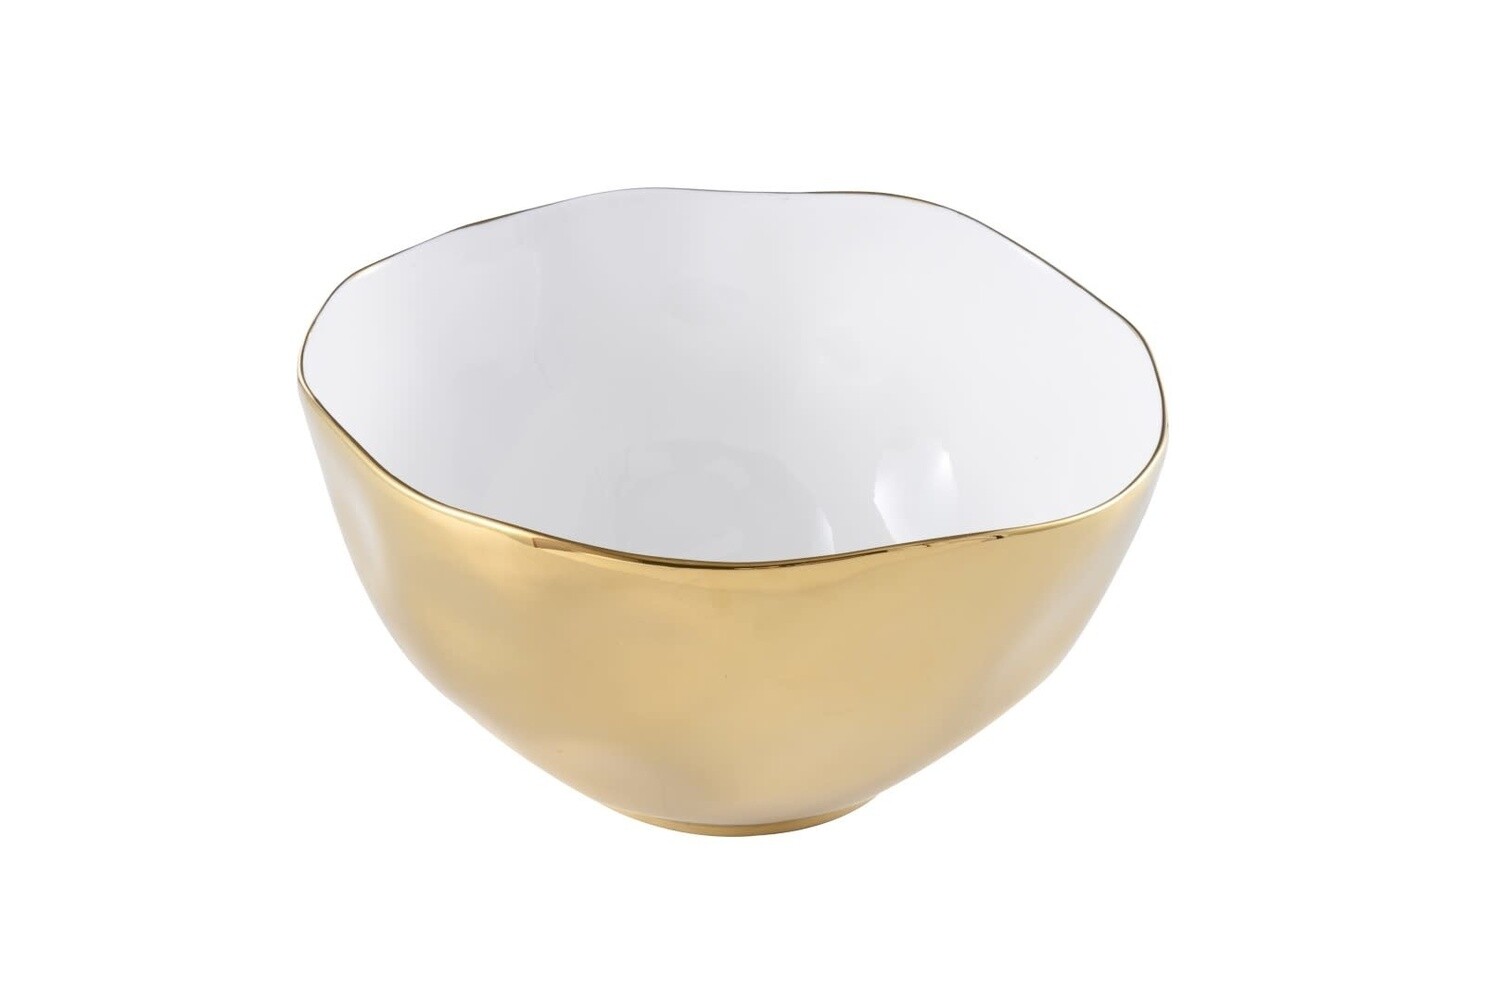 Simple Ceramic White & Gold Extra Large Bowl